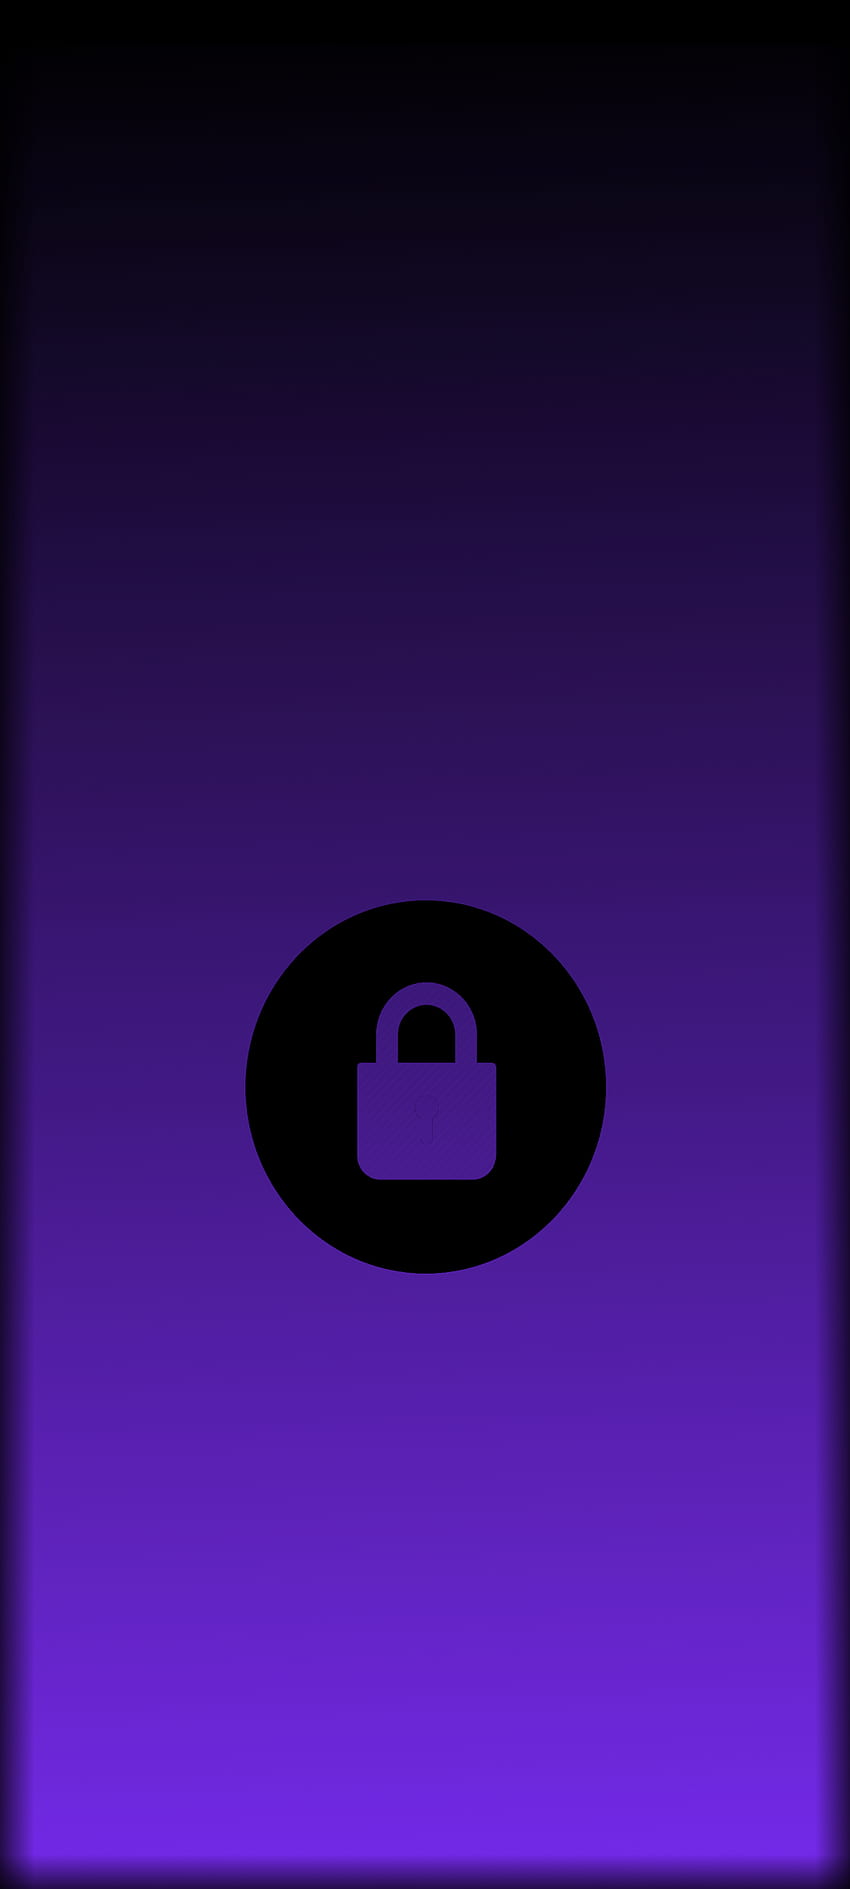 M21 Purple Lock Screen, Samsung Galaxy, Artwork, Award Winner, Cool, Vintage, High Definition, Super, Locked Screen, , Special, New S20.Android13, locked, A51, Druffix, Gigaset, Apple iPhone, 2021, iPhoneX, M32, Magma, Modern Style, 5G, Love, contrast, Edge, Nokia HD phone wallpaper